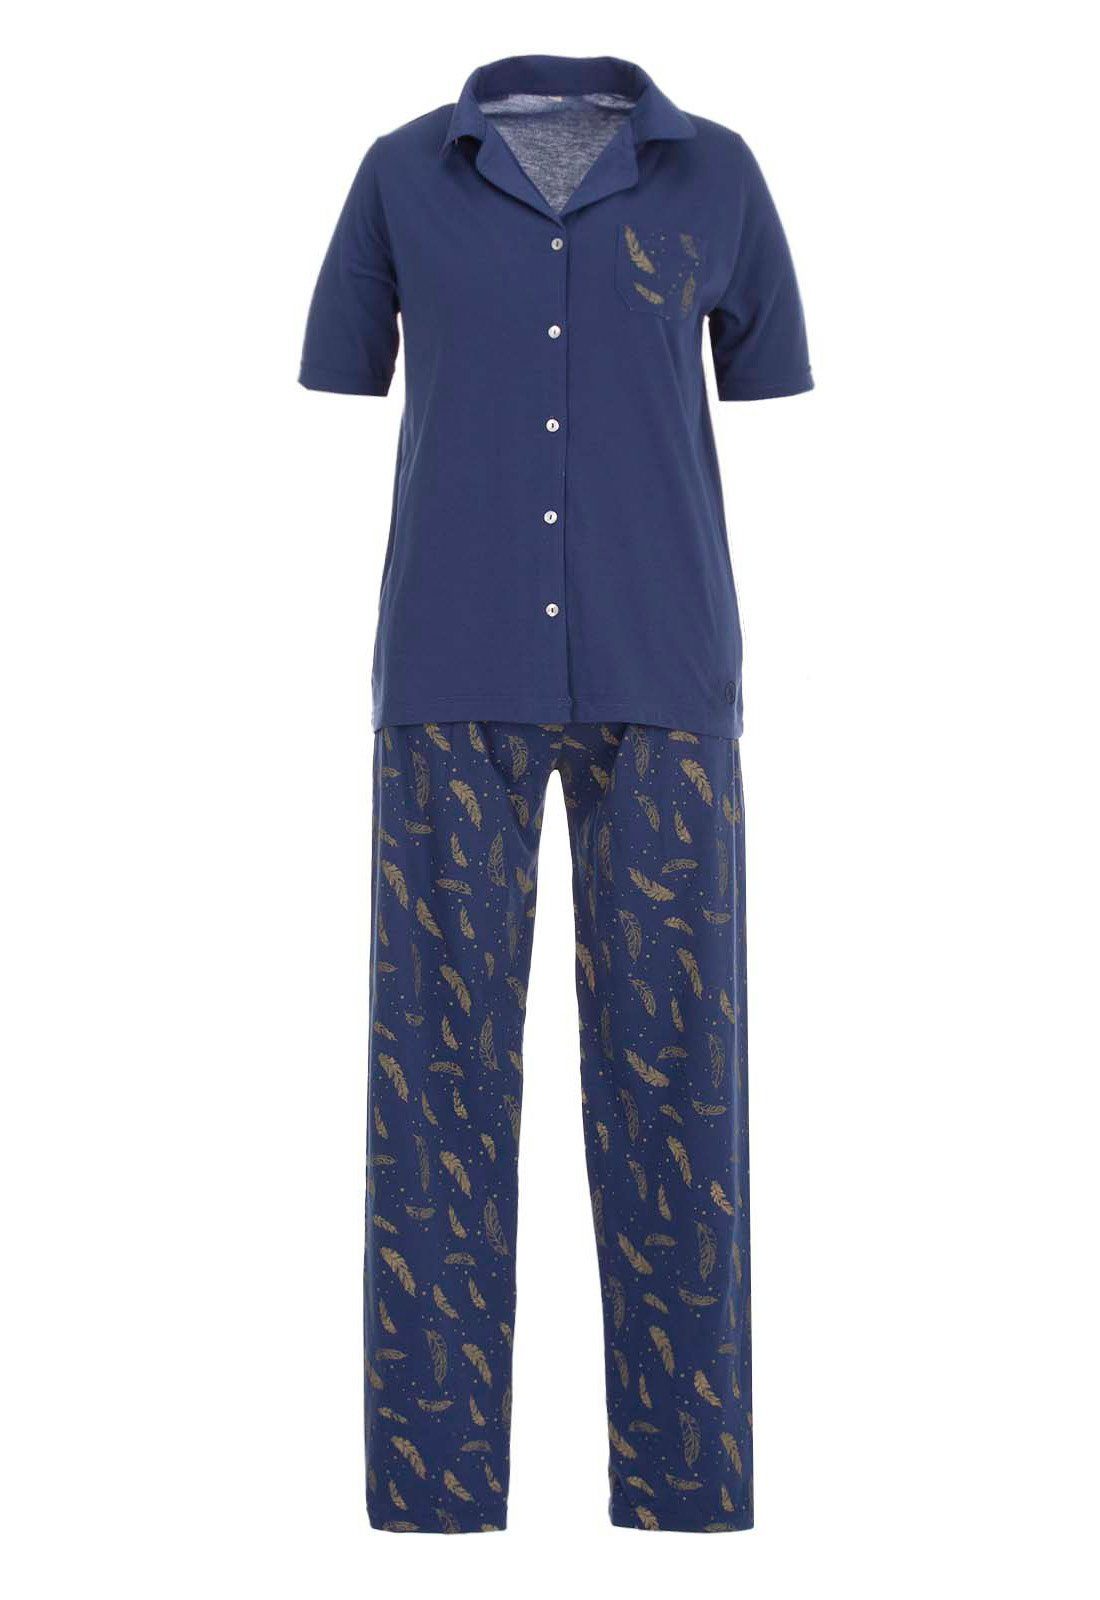 zeitlos Schlafanzug Pyjama Set Kurzarm - Feder blau